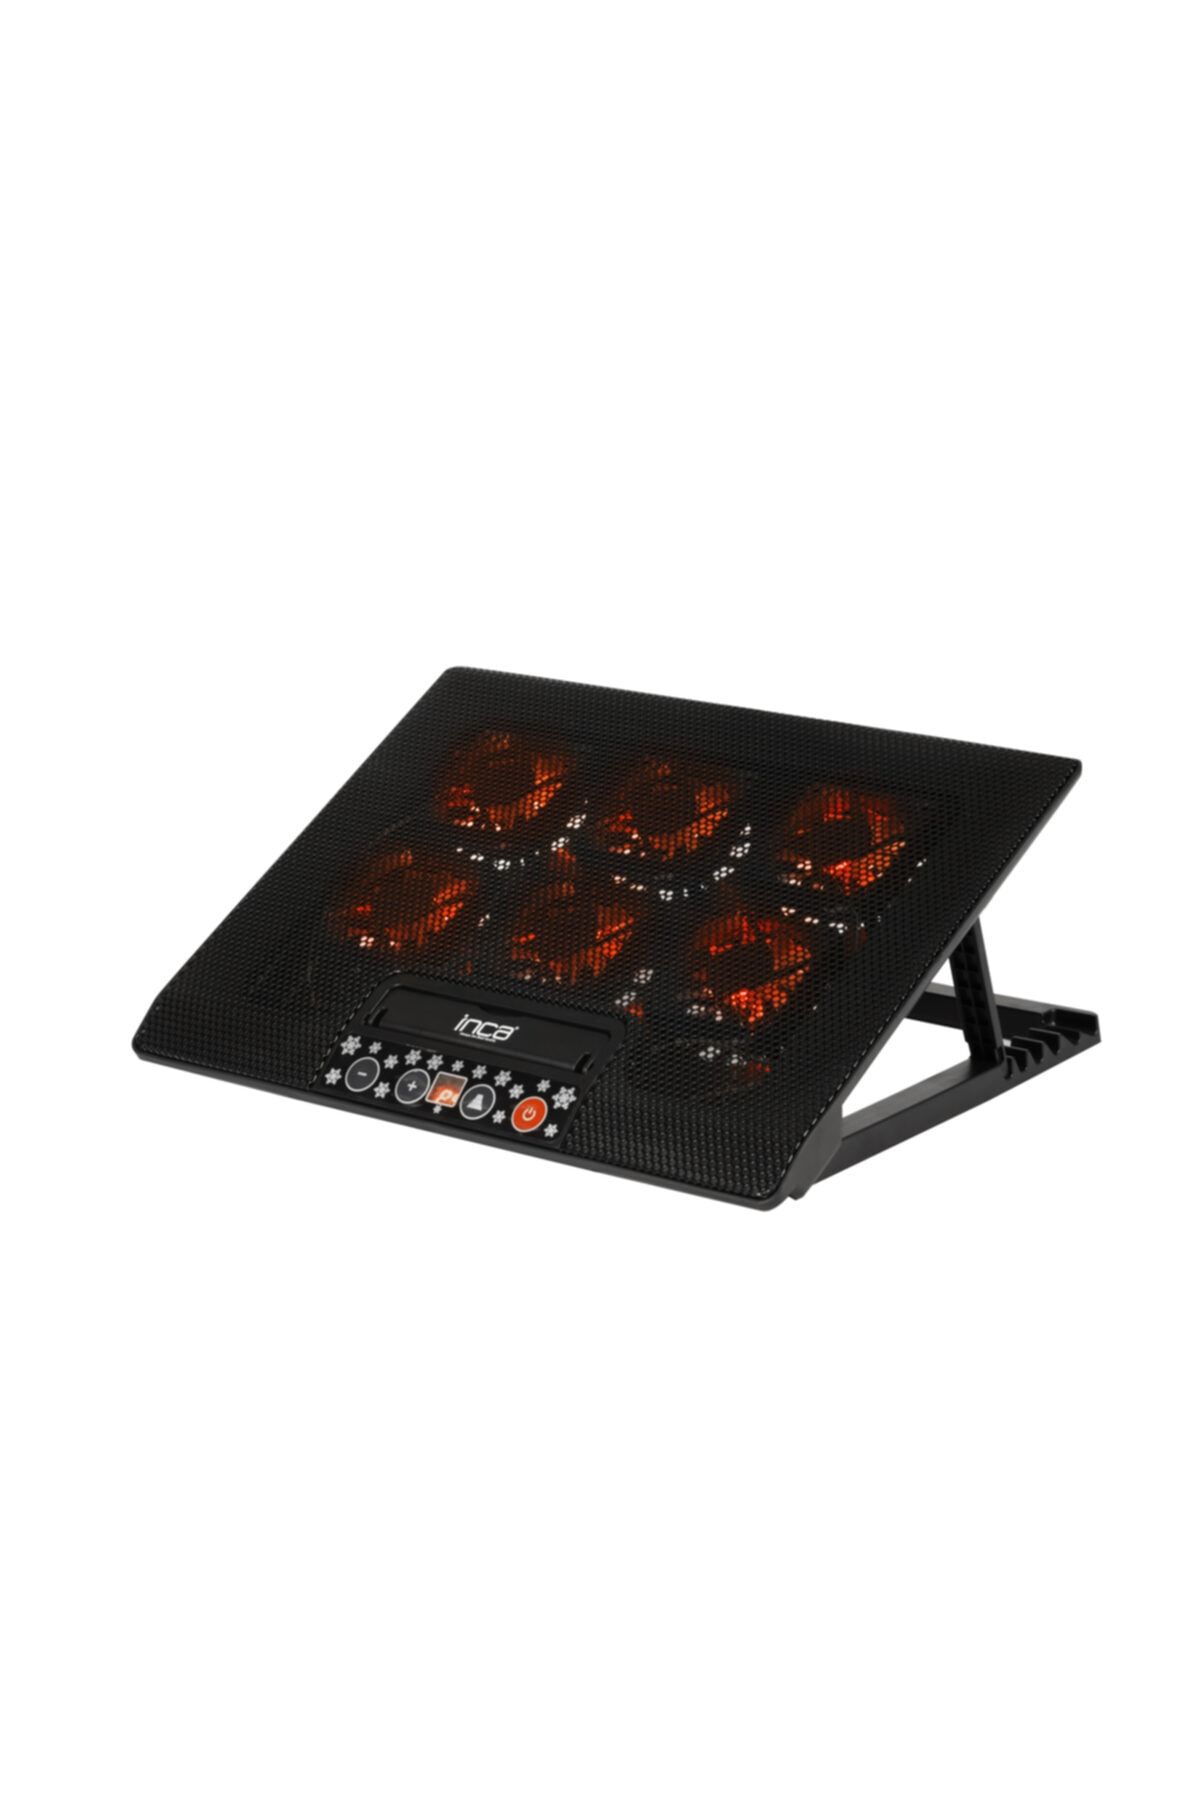 Inca Inc-604tgs 6x Fan, Control Panel, 2x Usb, 6 Stage Gamıng Notebook Cooler 7 "-17"